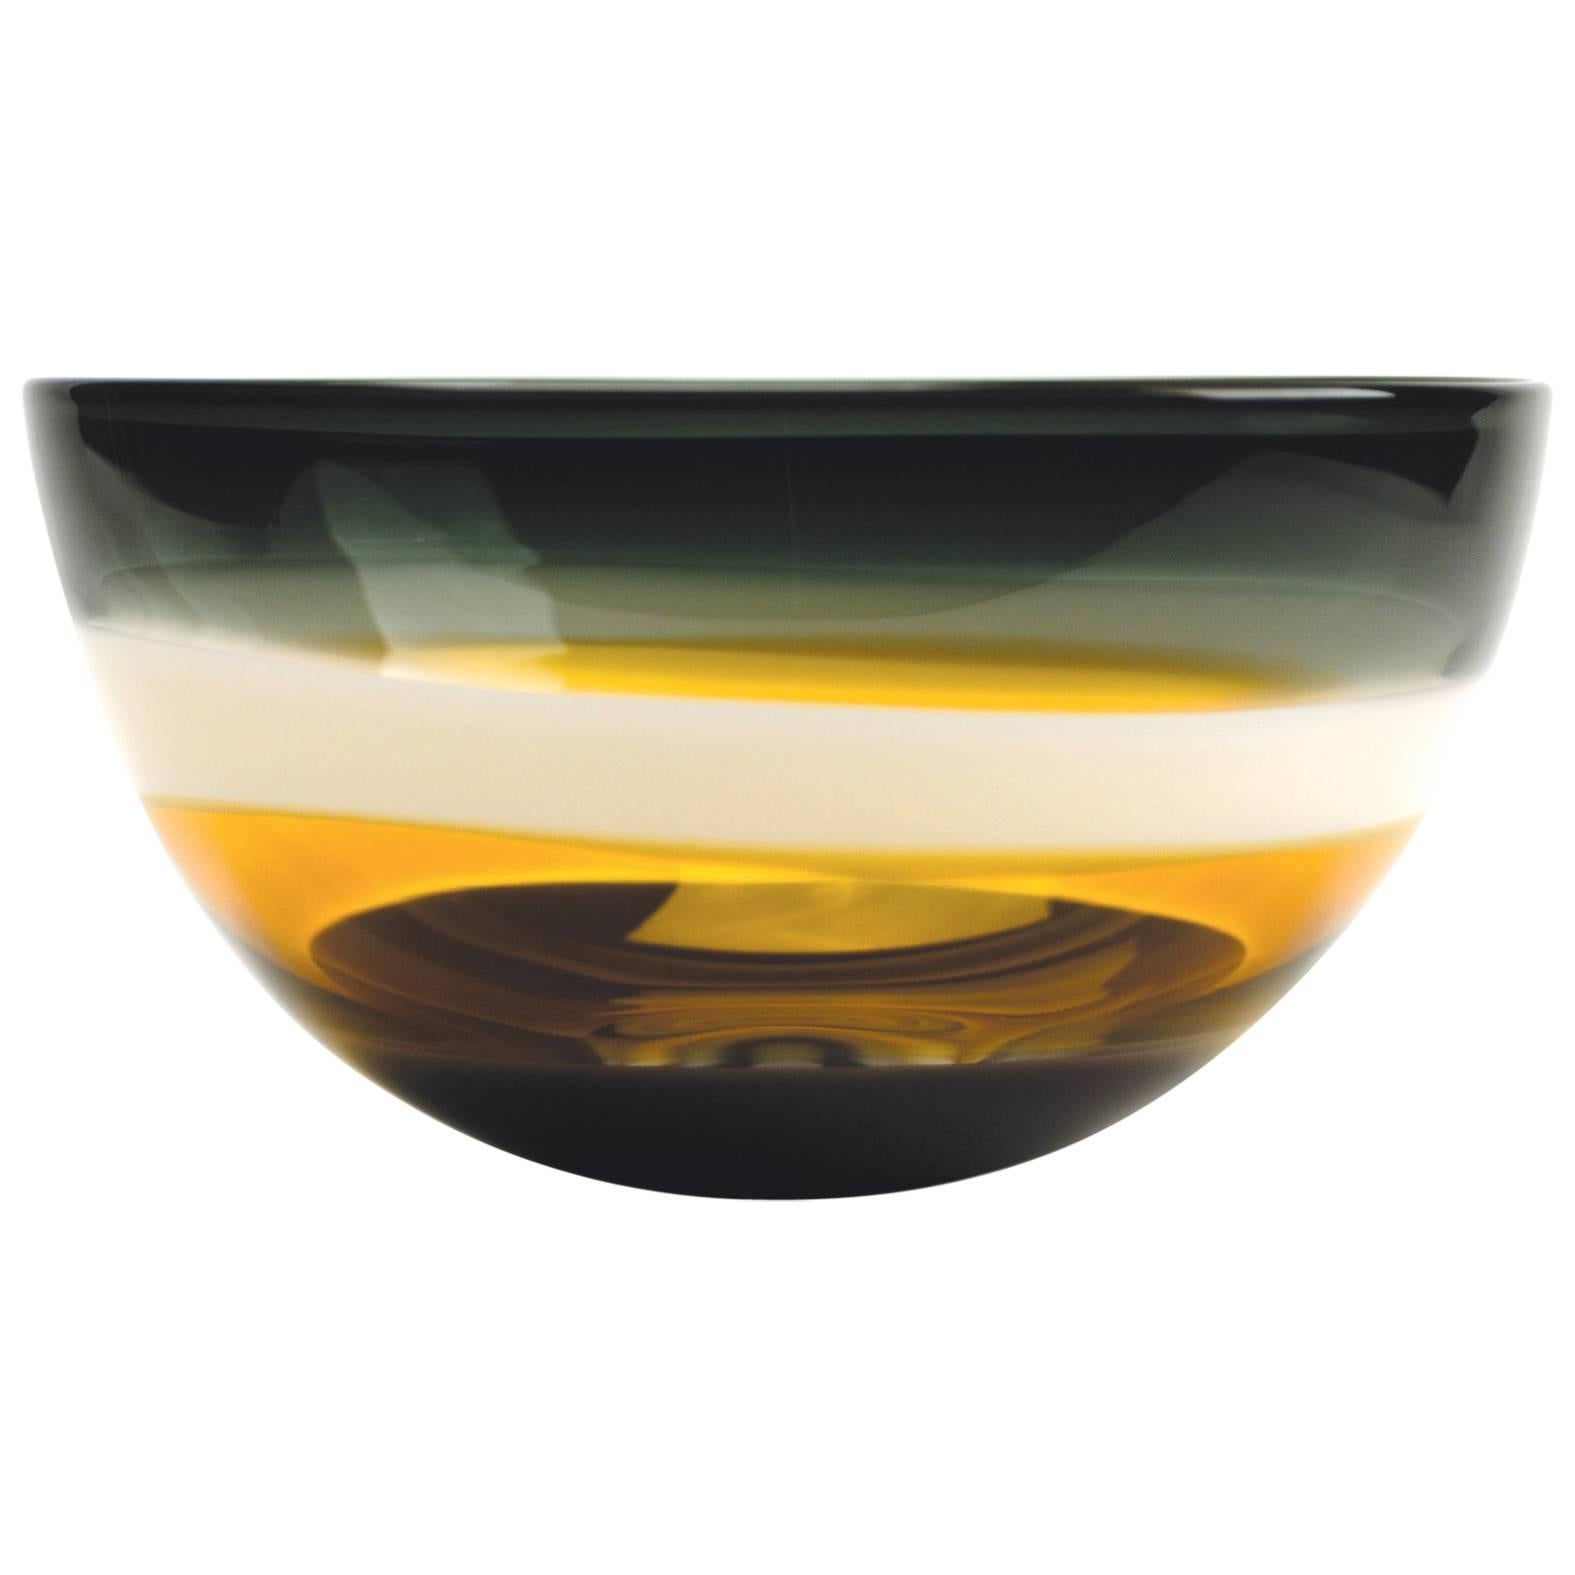 Earth Tone Blown Glass Bowl by California Designer Caleb Siemon